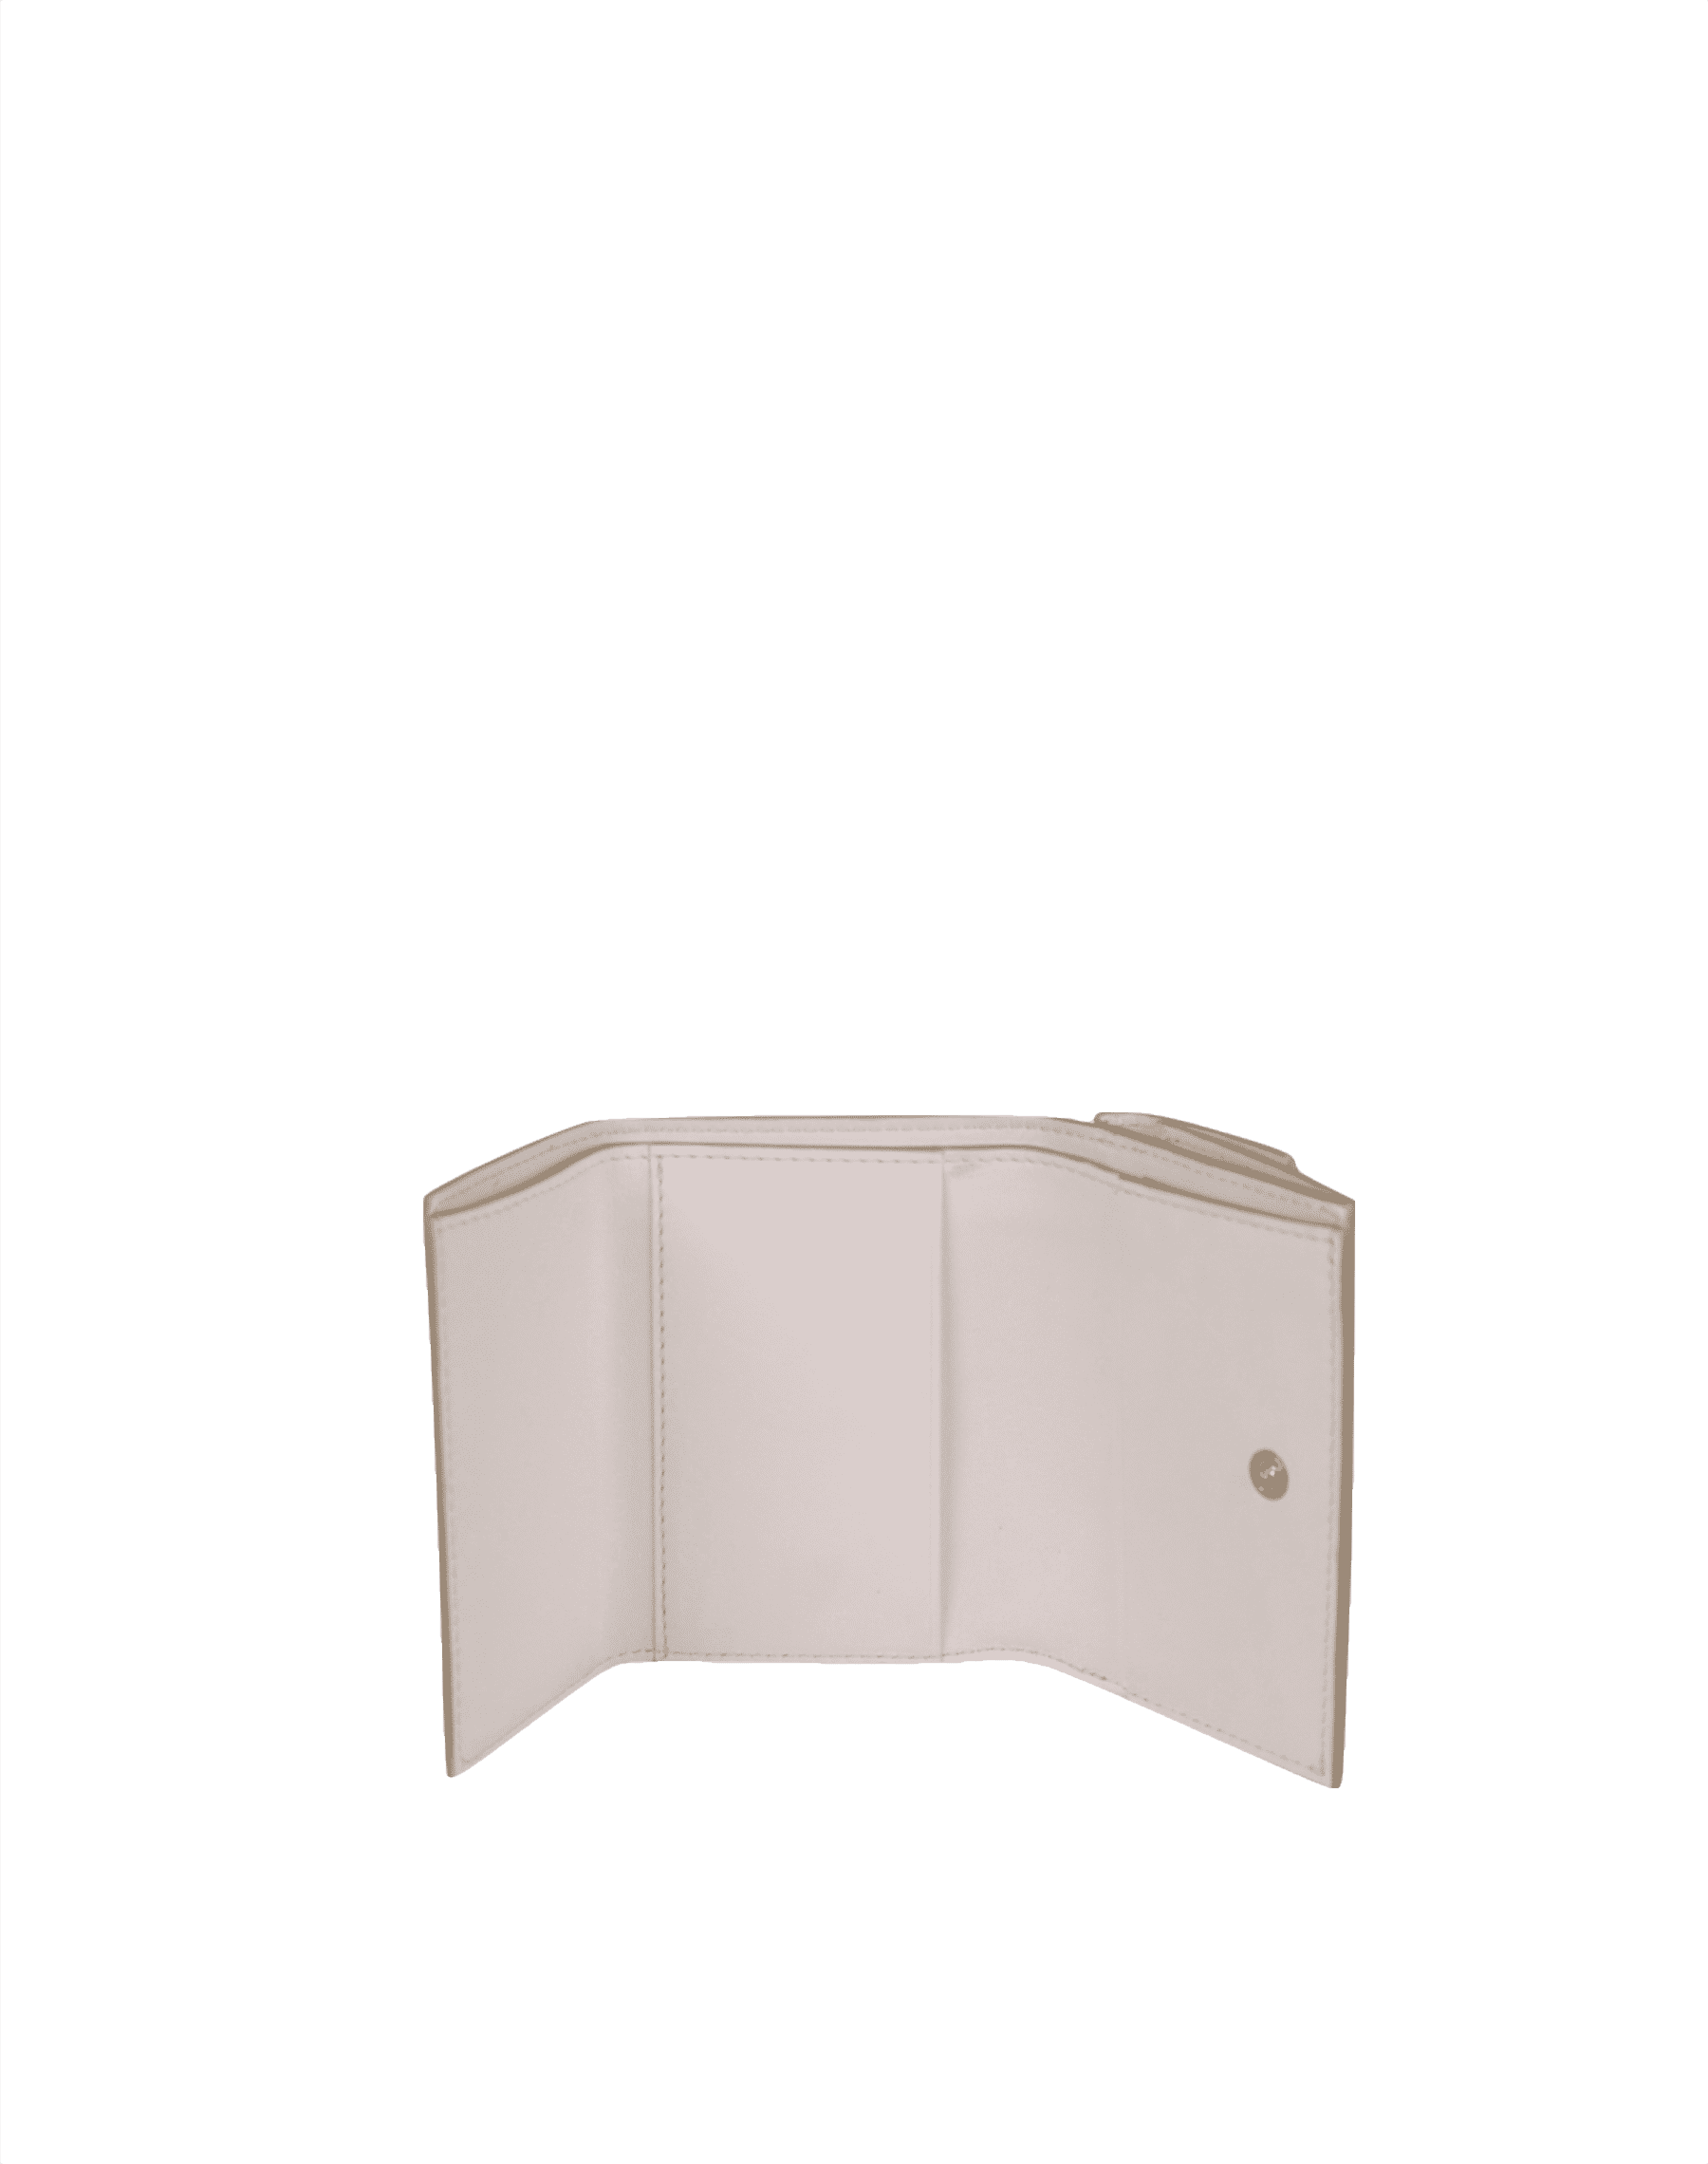 Tri fold Wallet image (Tri fold Wallet)